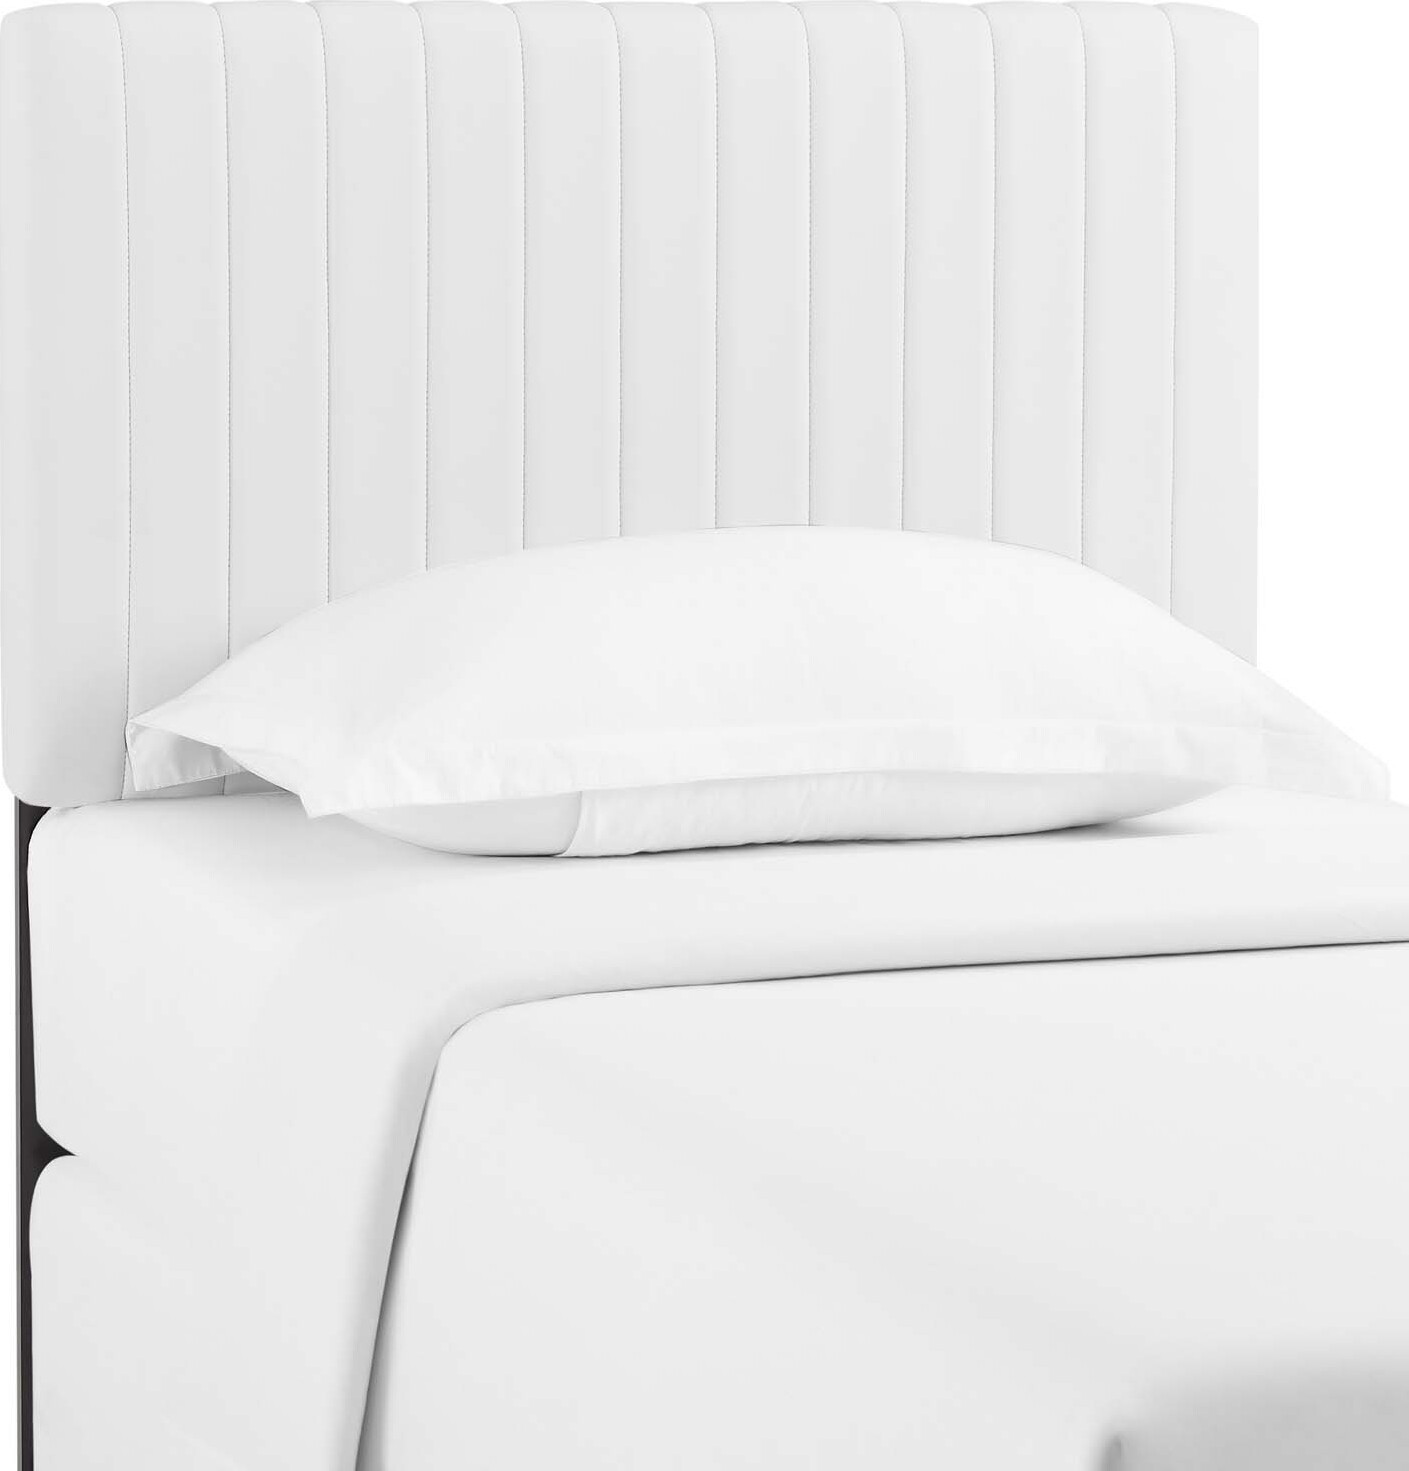 Keira White Twin Faux Leather Headboard, White Twin Bed Headboard